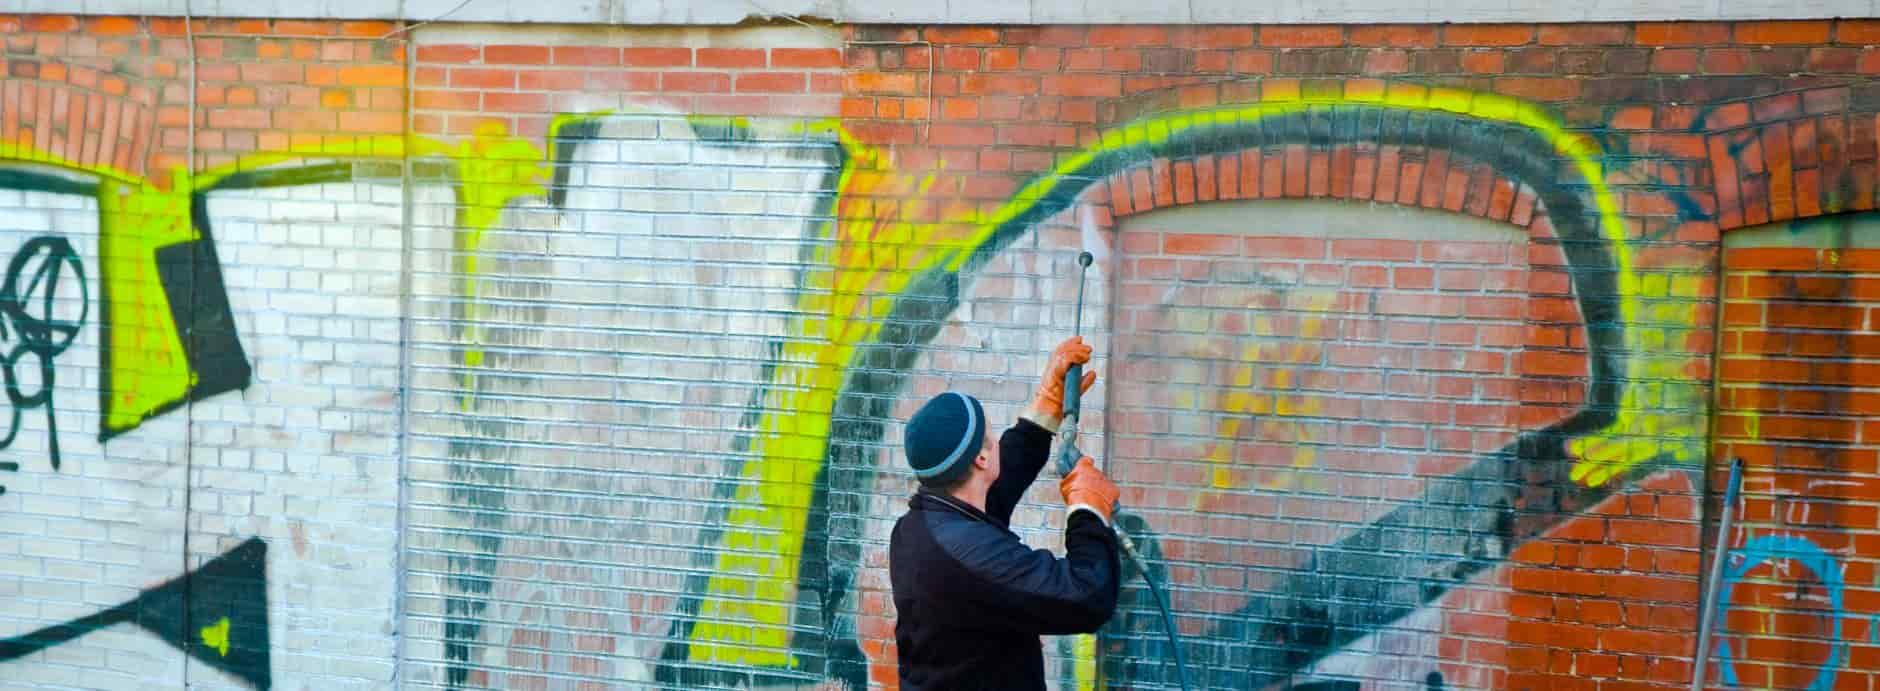 Graffiti Removal in Sunderland